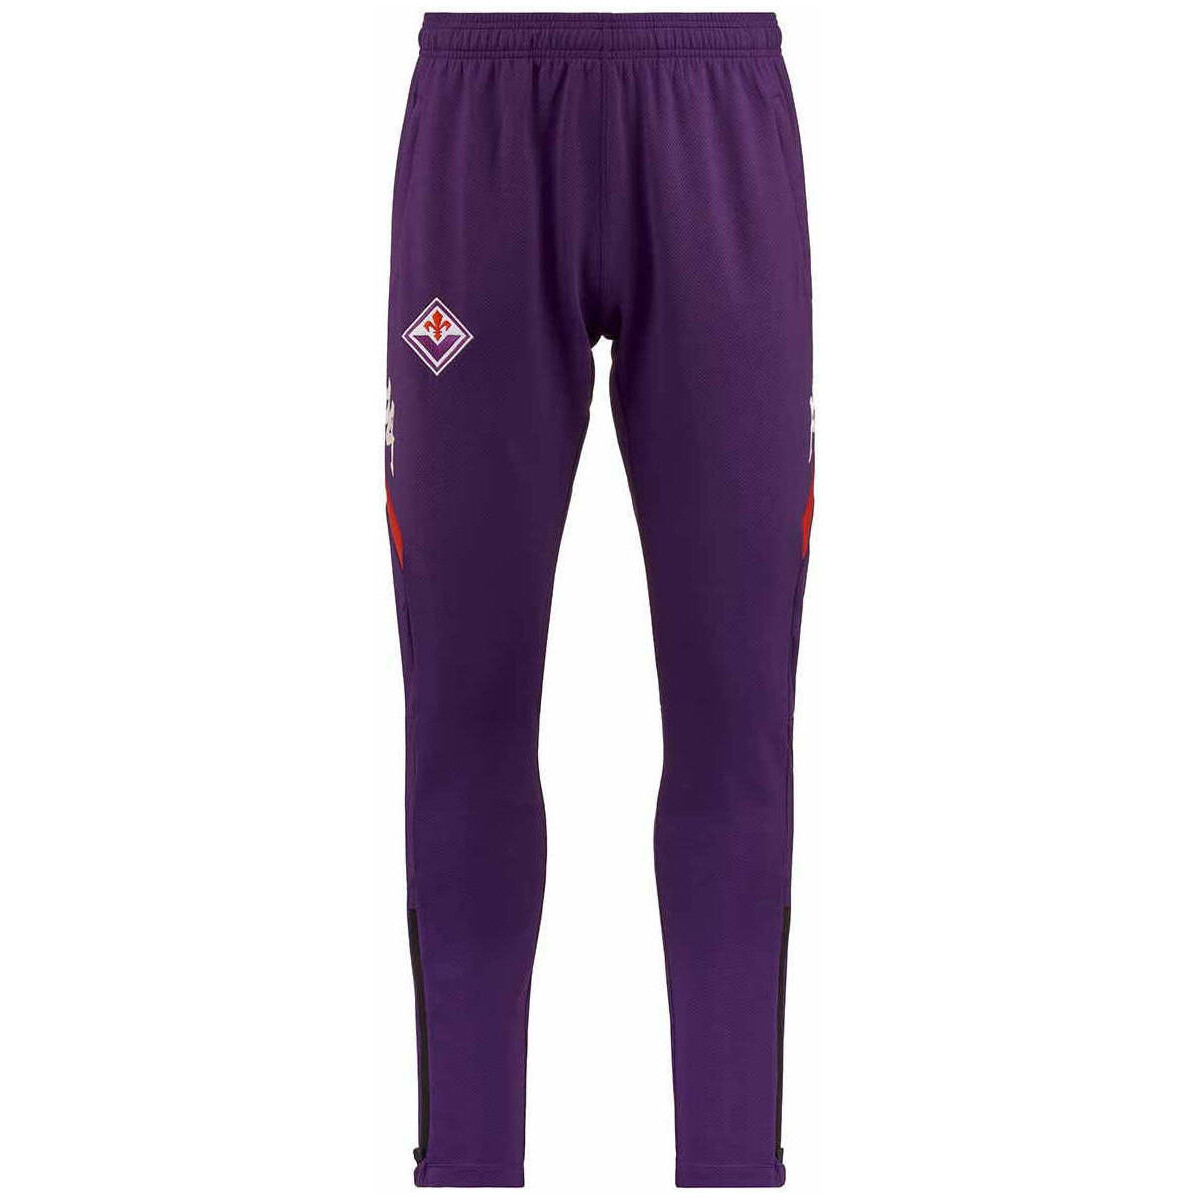 Vêtements Garçon Pantalons de survêtement Kappa Pantalon Abunszip Pro 6 ACF Fiorentina 22/23 Violet